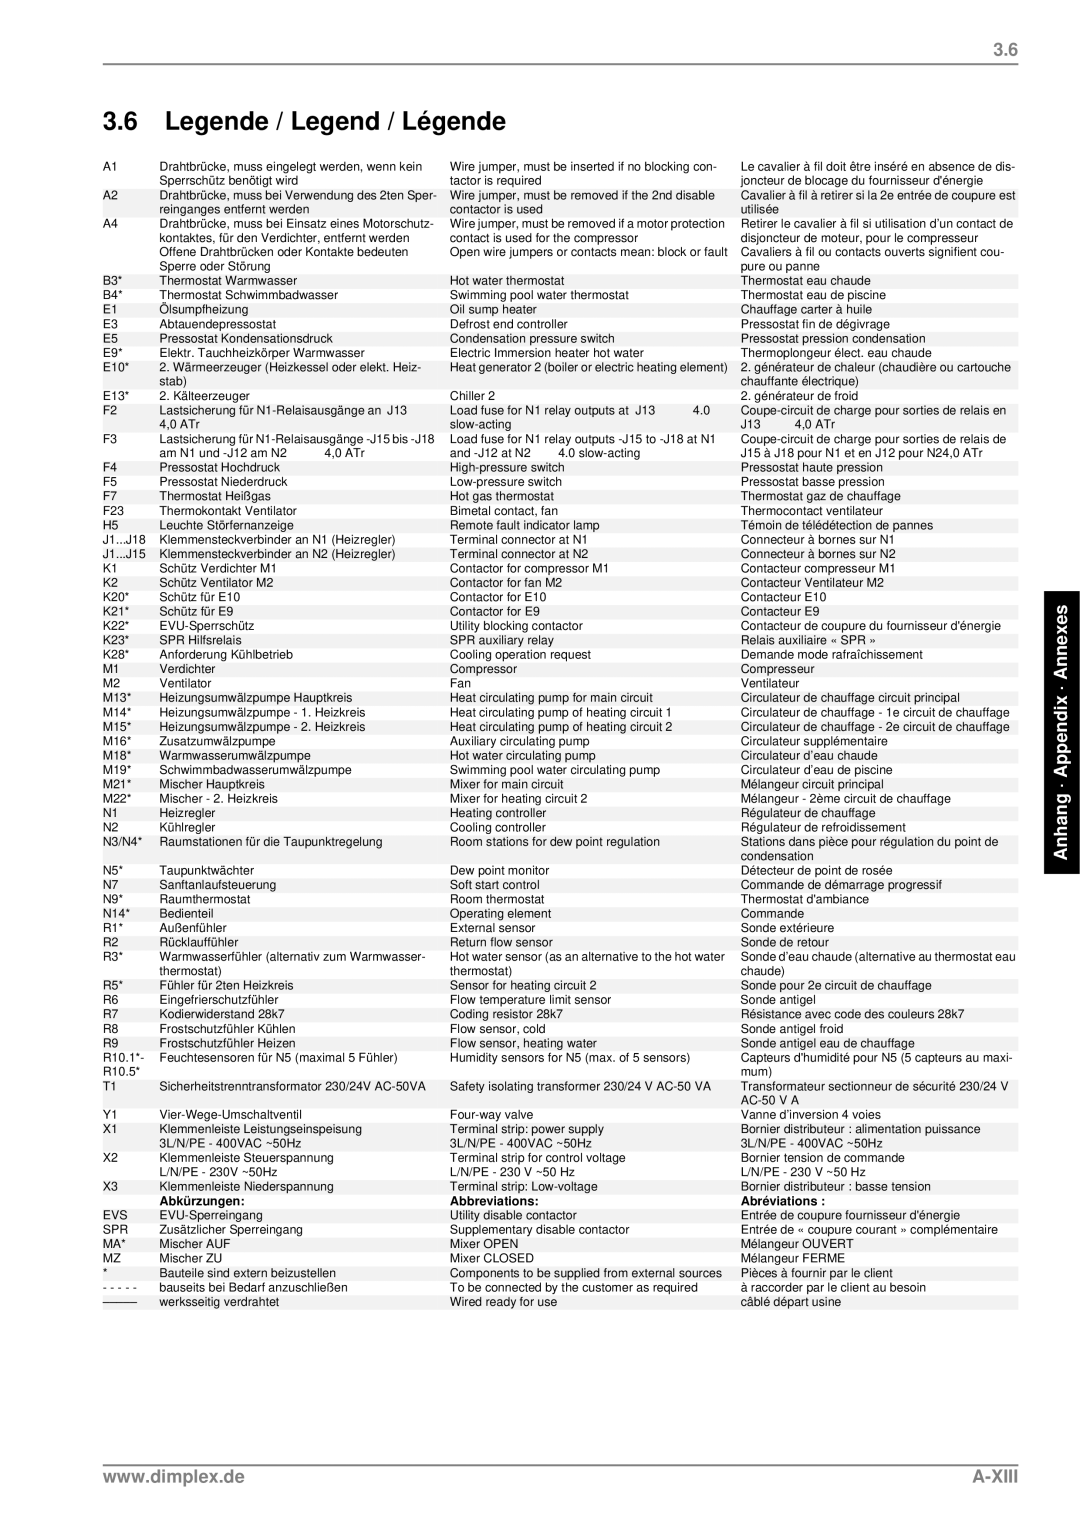 Dimplex LI 16TER+, LI 11TER+, Heat Pump, 190 manual 3.6Legende / Legend / Légende, Anhang · Appendix · Annexes, A-Xiii 